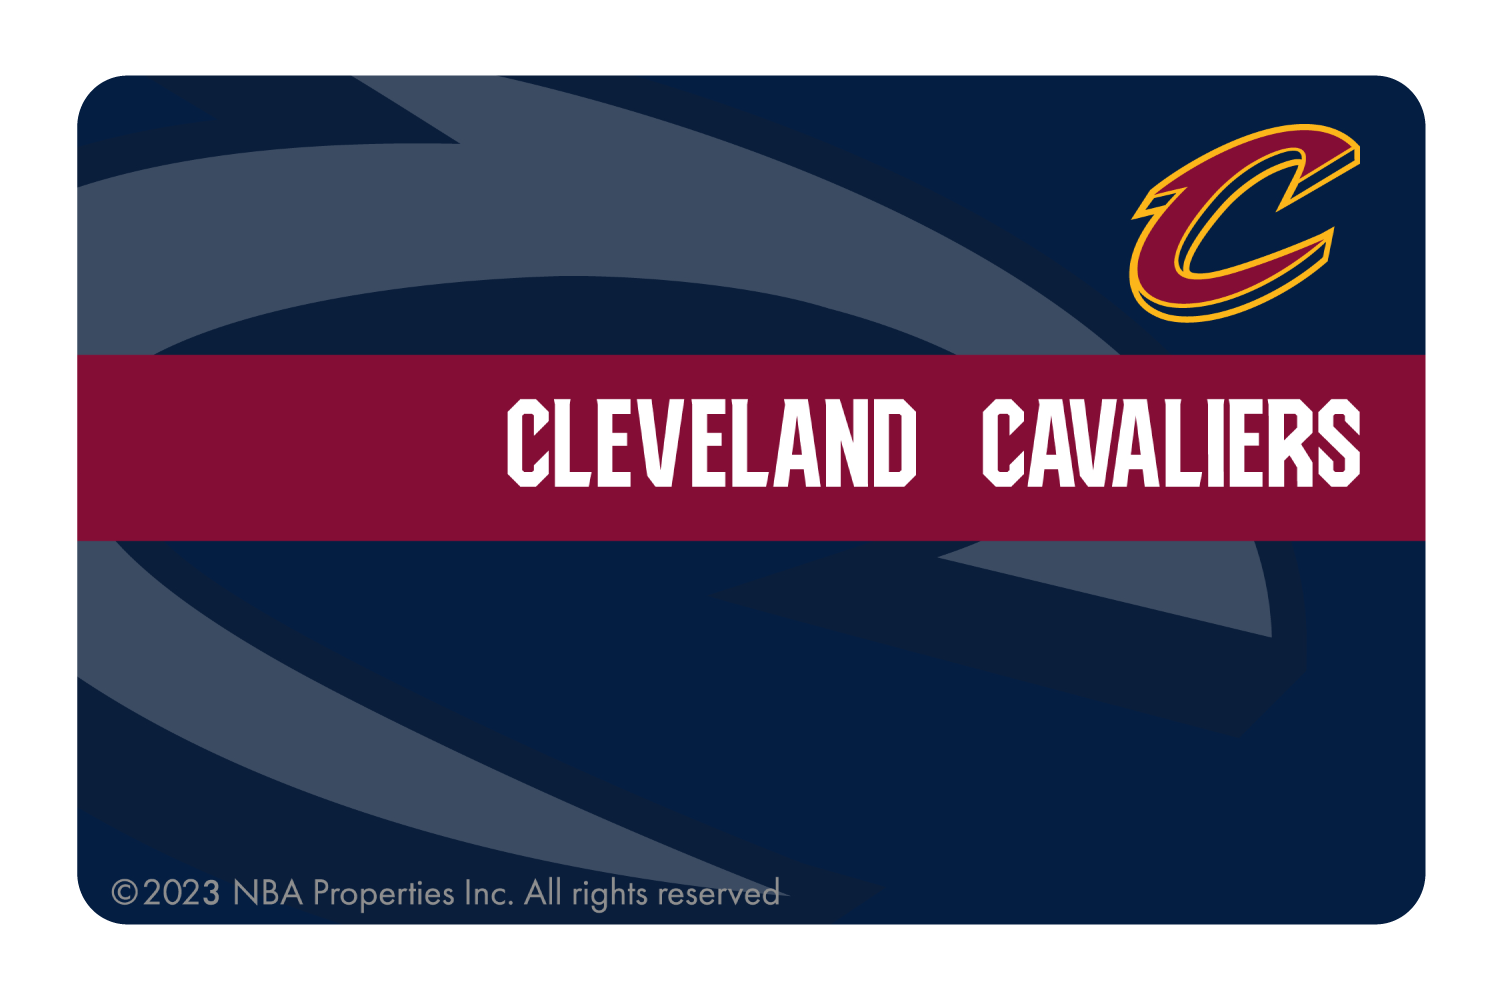 Cleveland Cavaliers: Midcourt